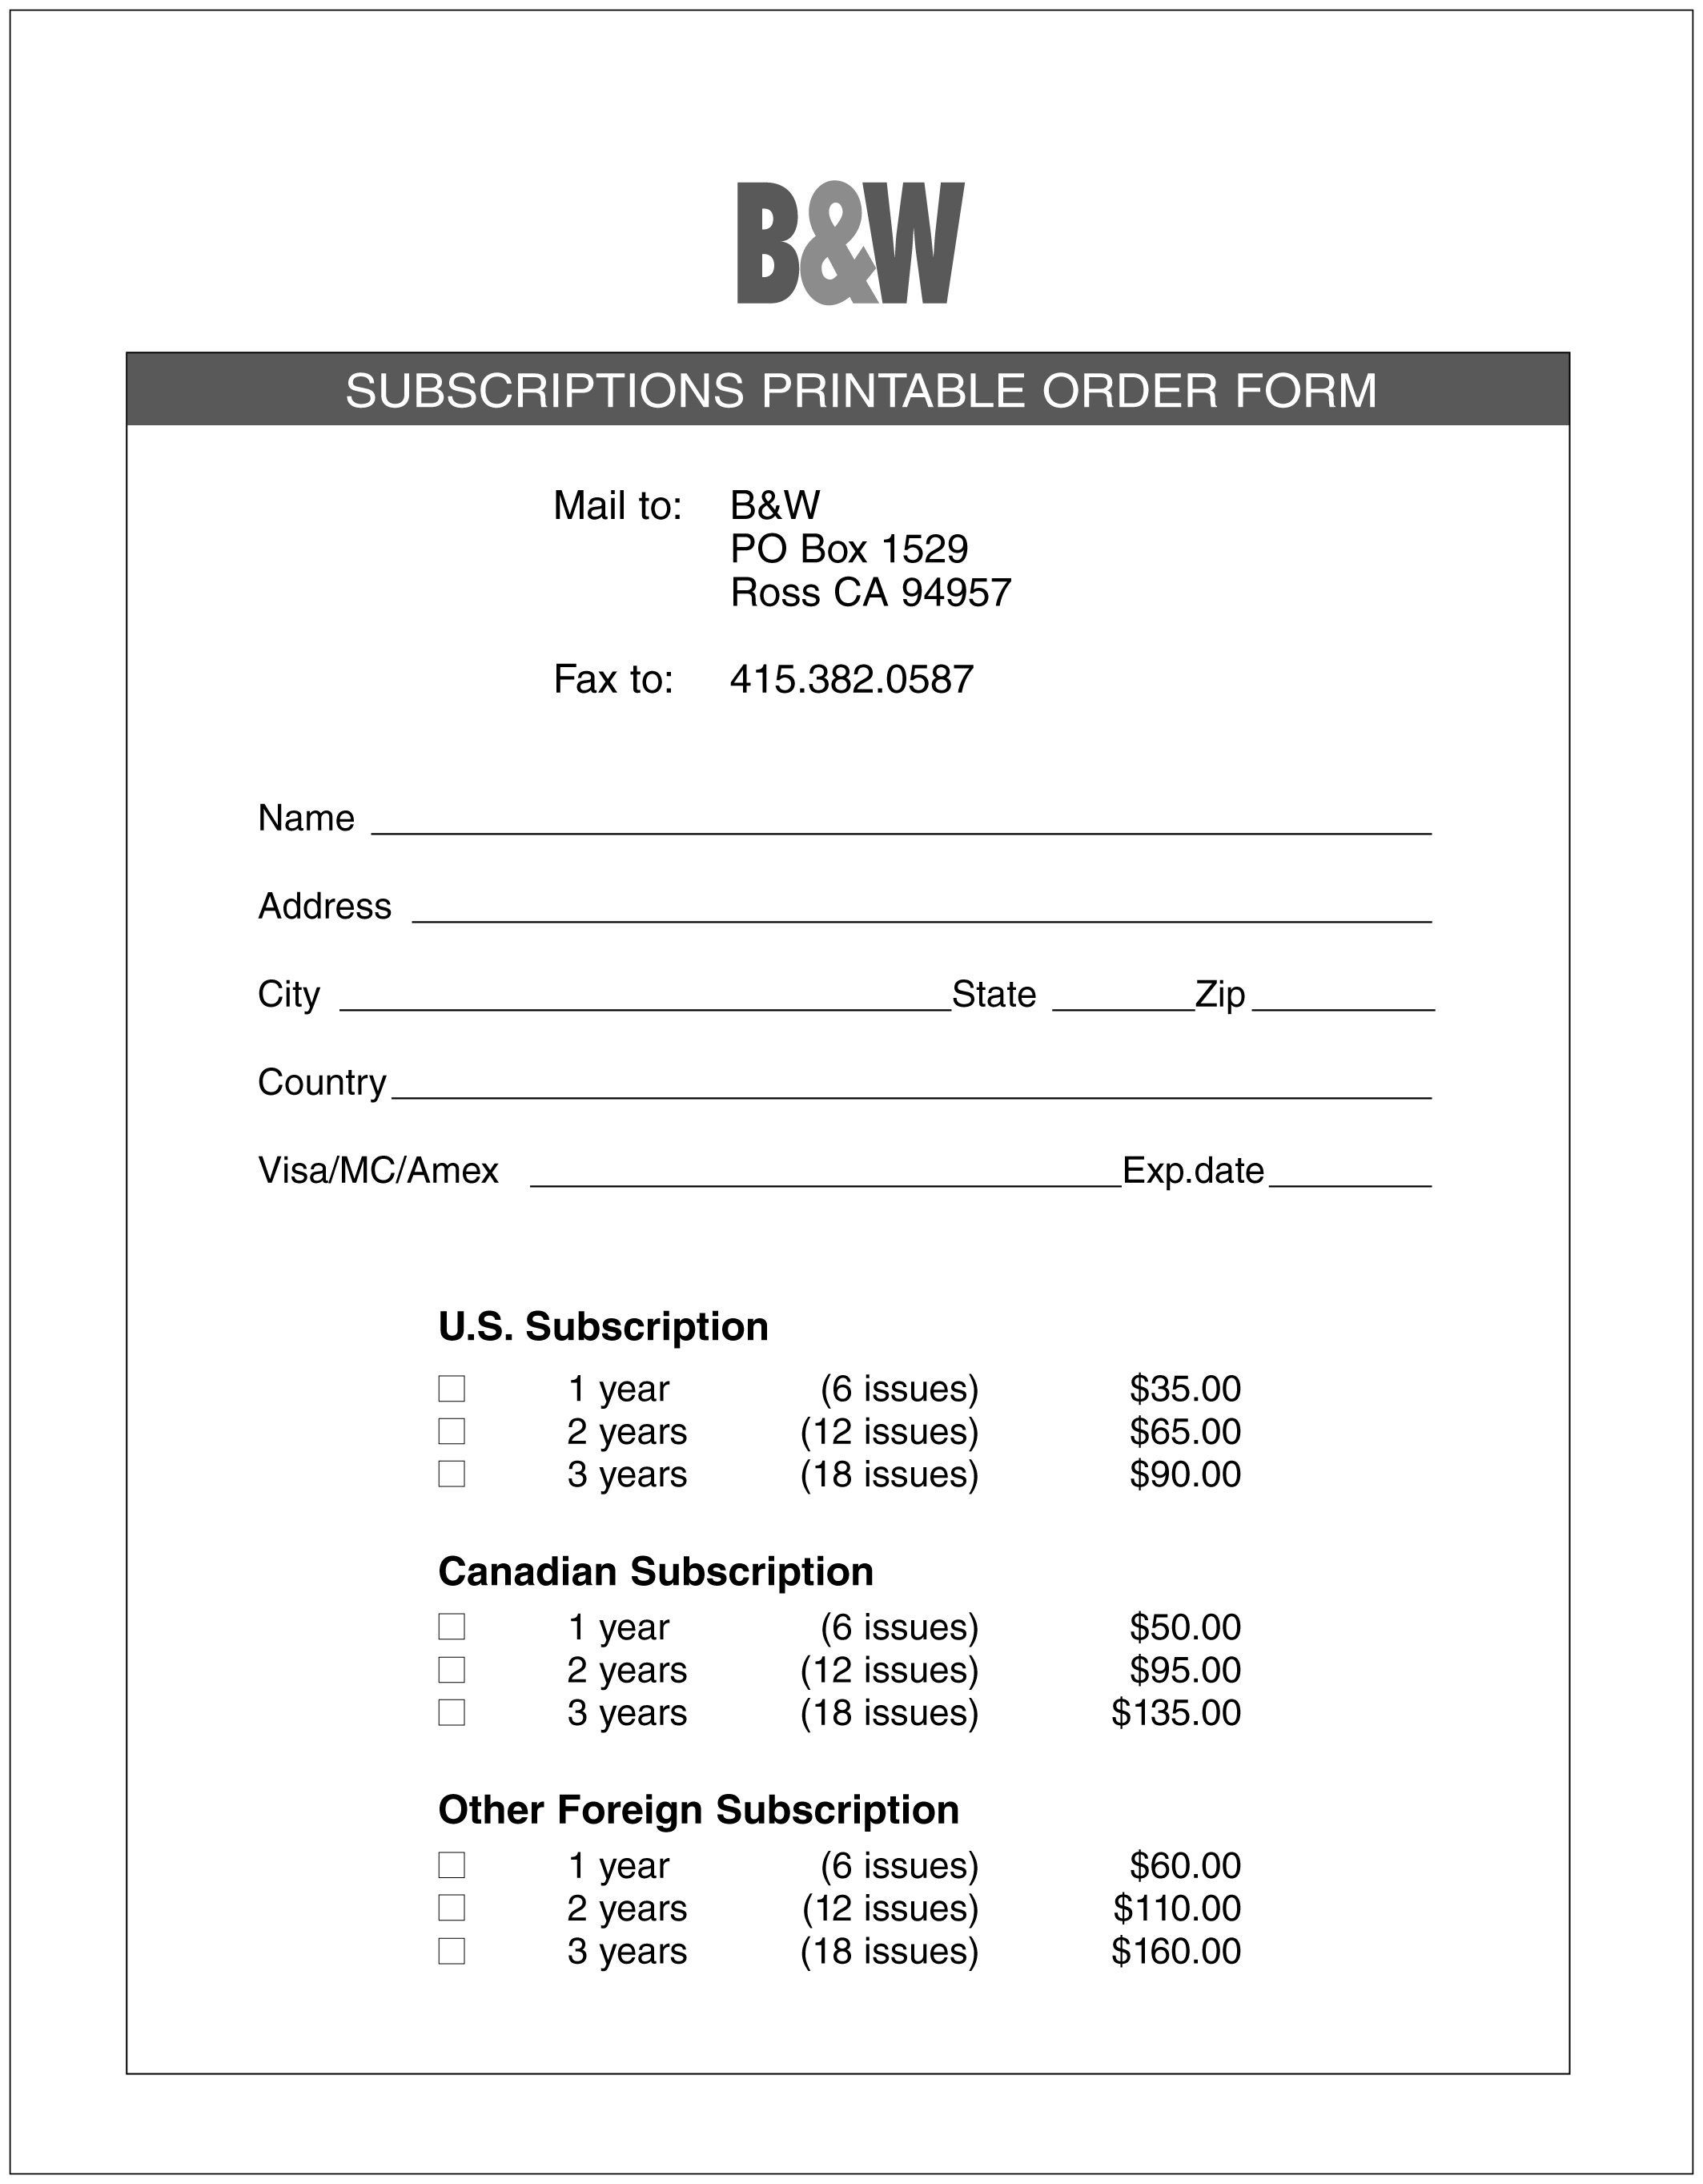 Black & White Subscription Order Form